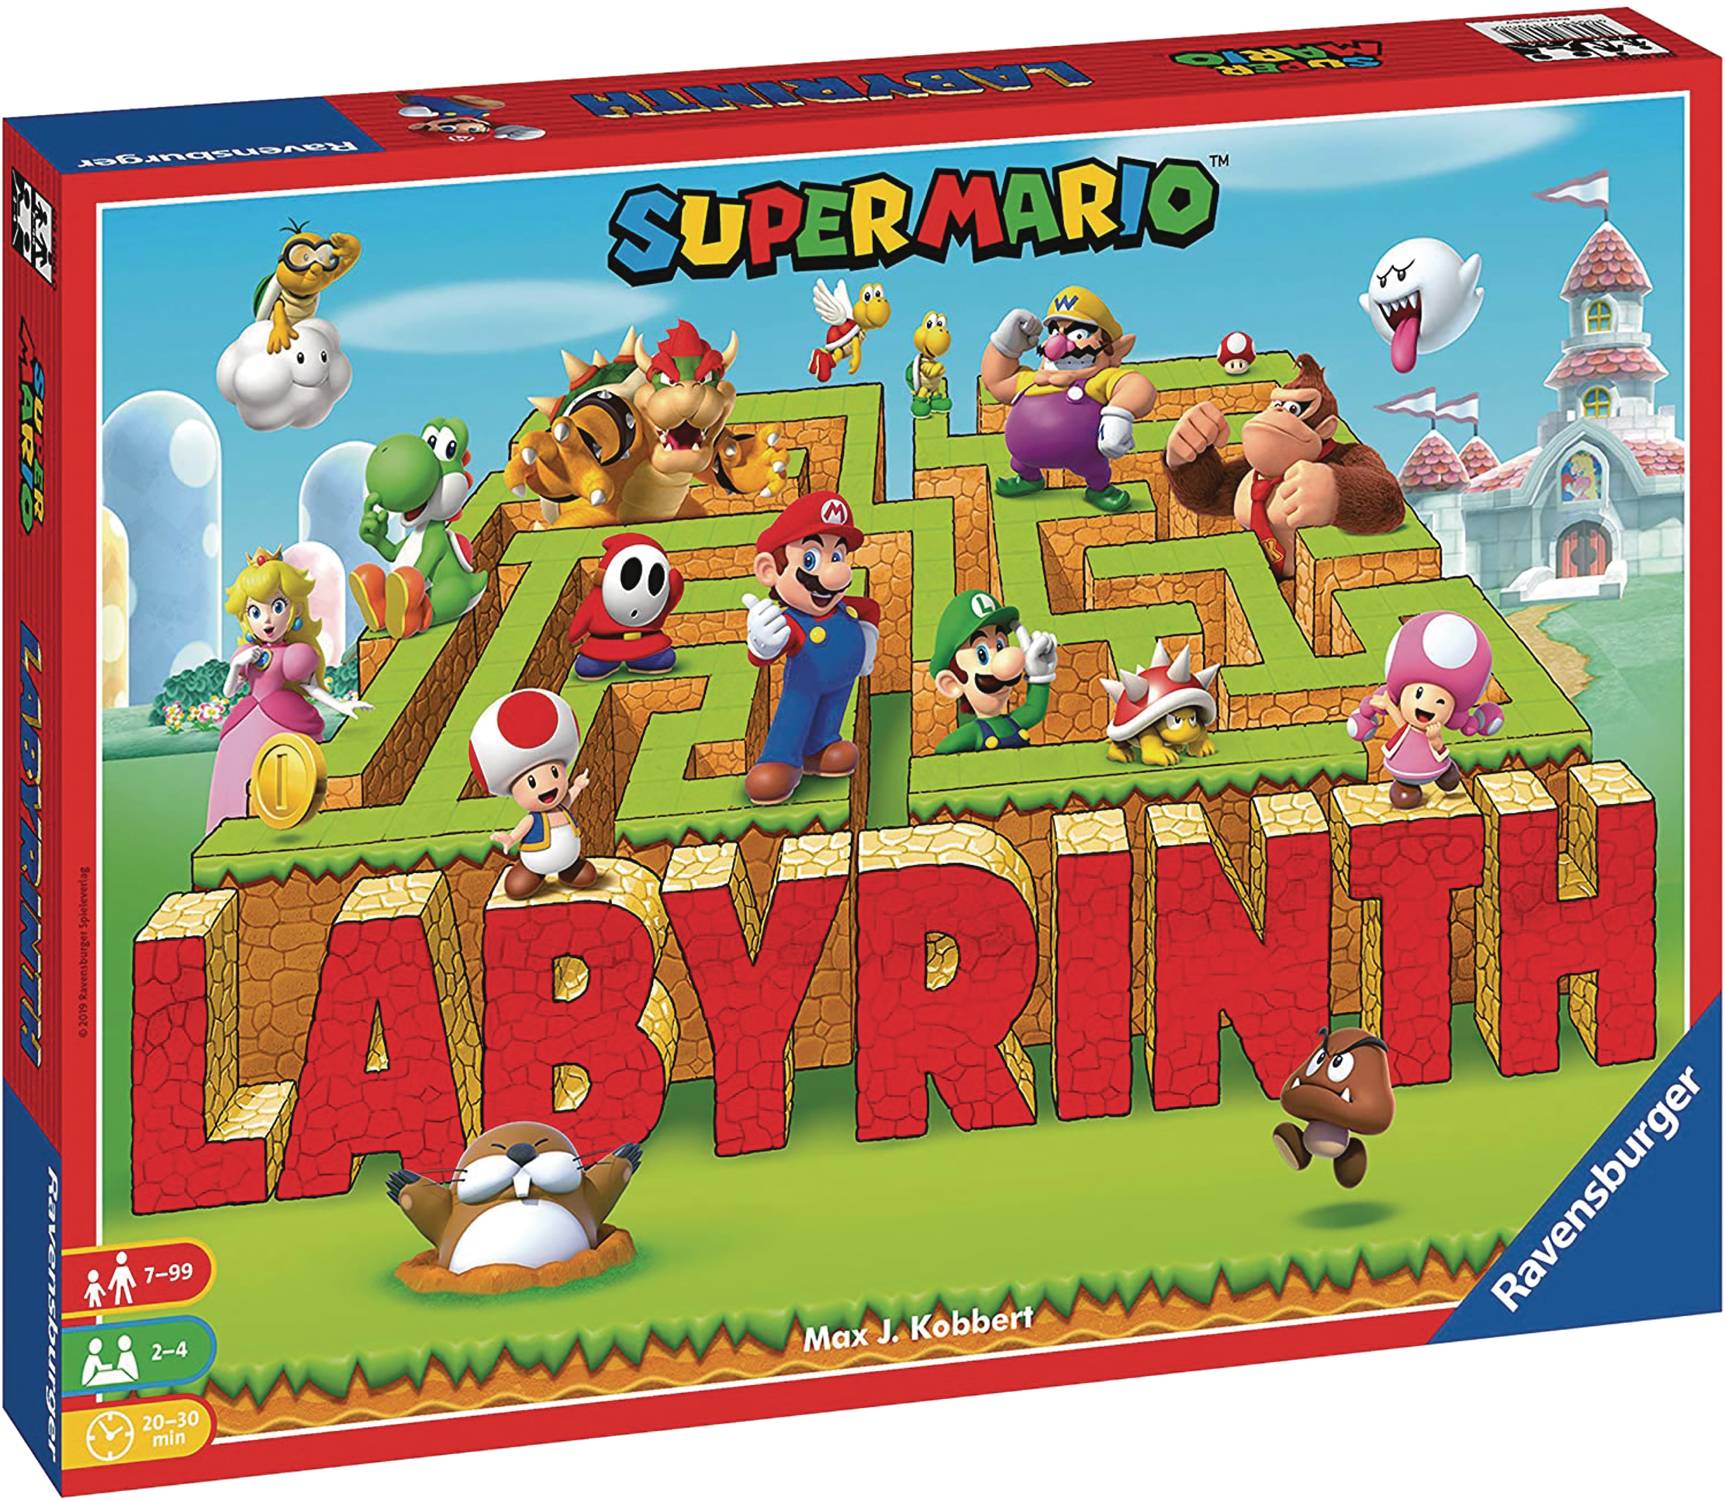 SUPER MARIO MOVING LABYRINTH BOARD GAME